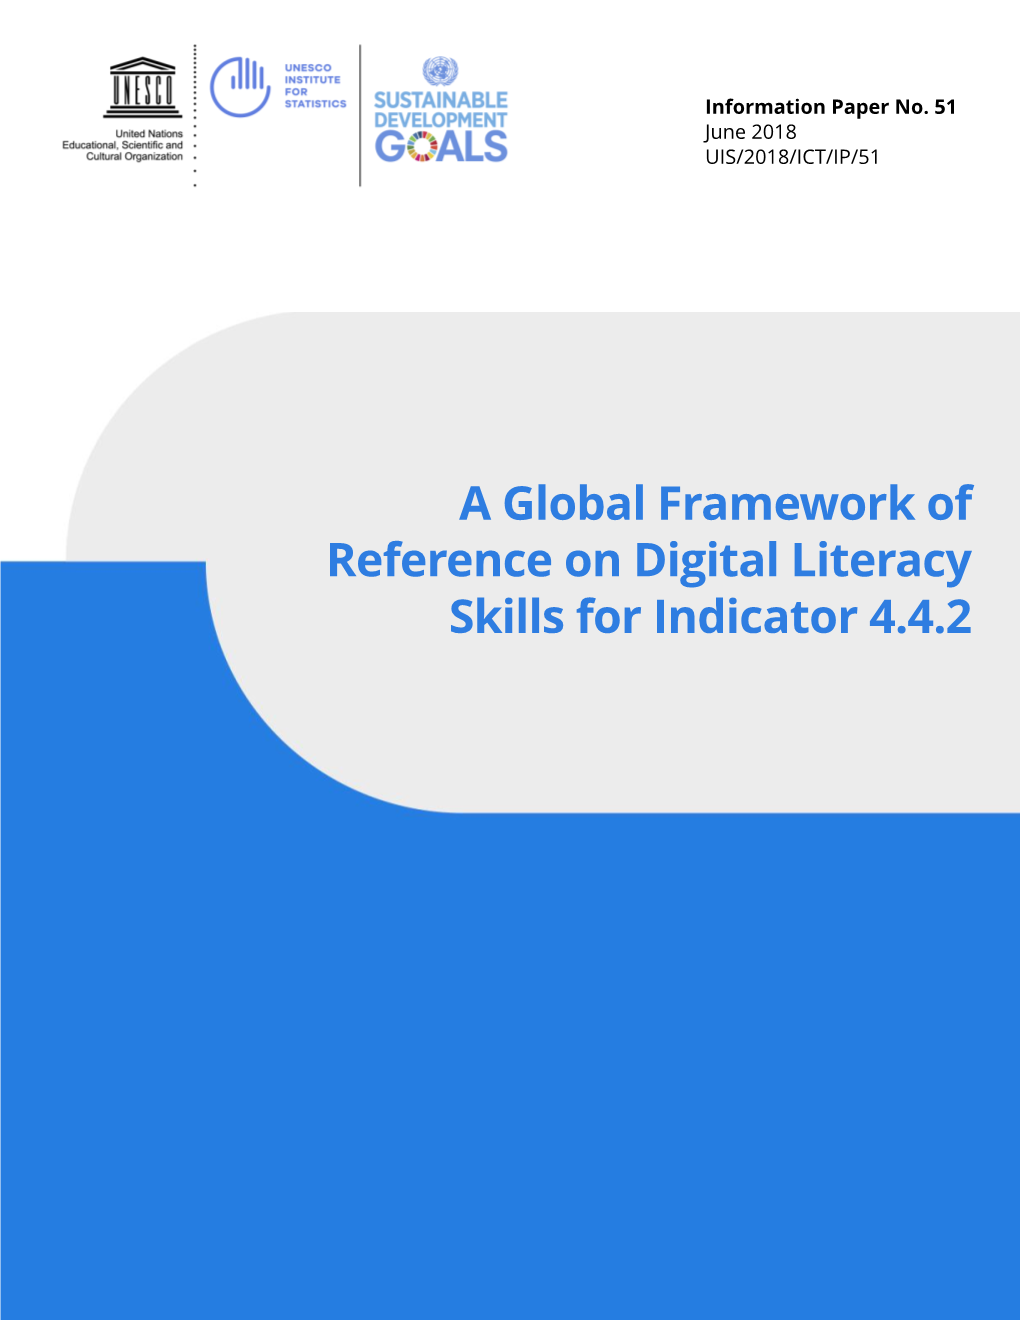 Global Framework of Reference on Digital Literacy Skills for Indicator 4.4.2